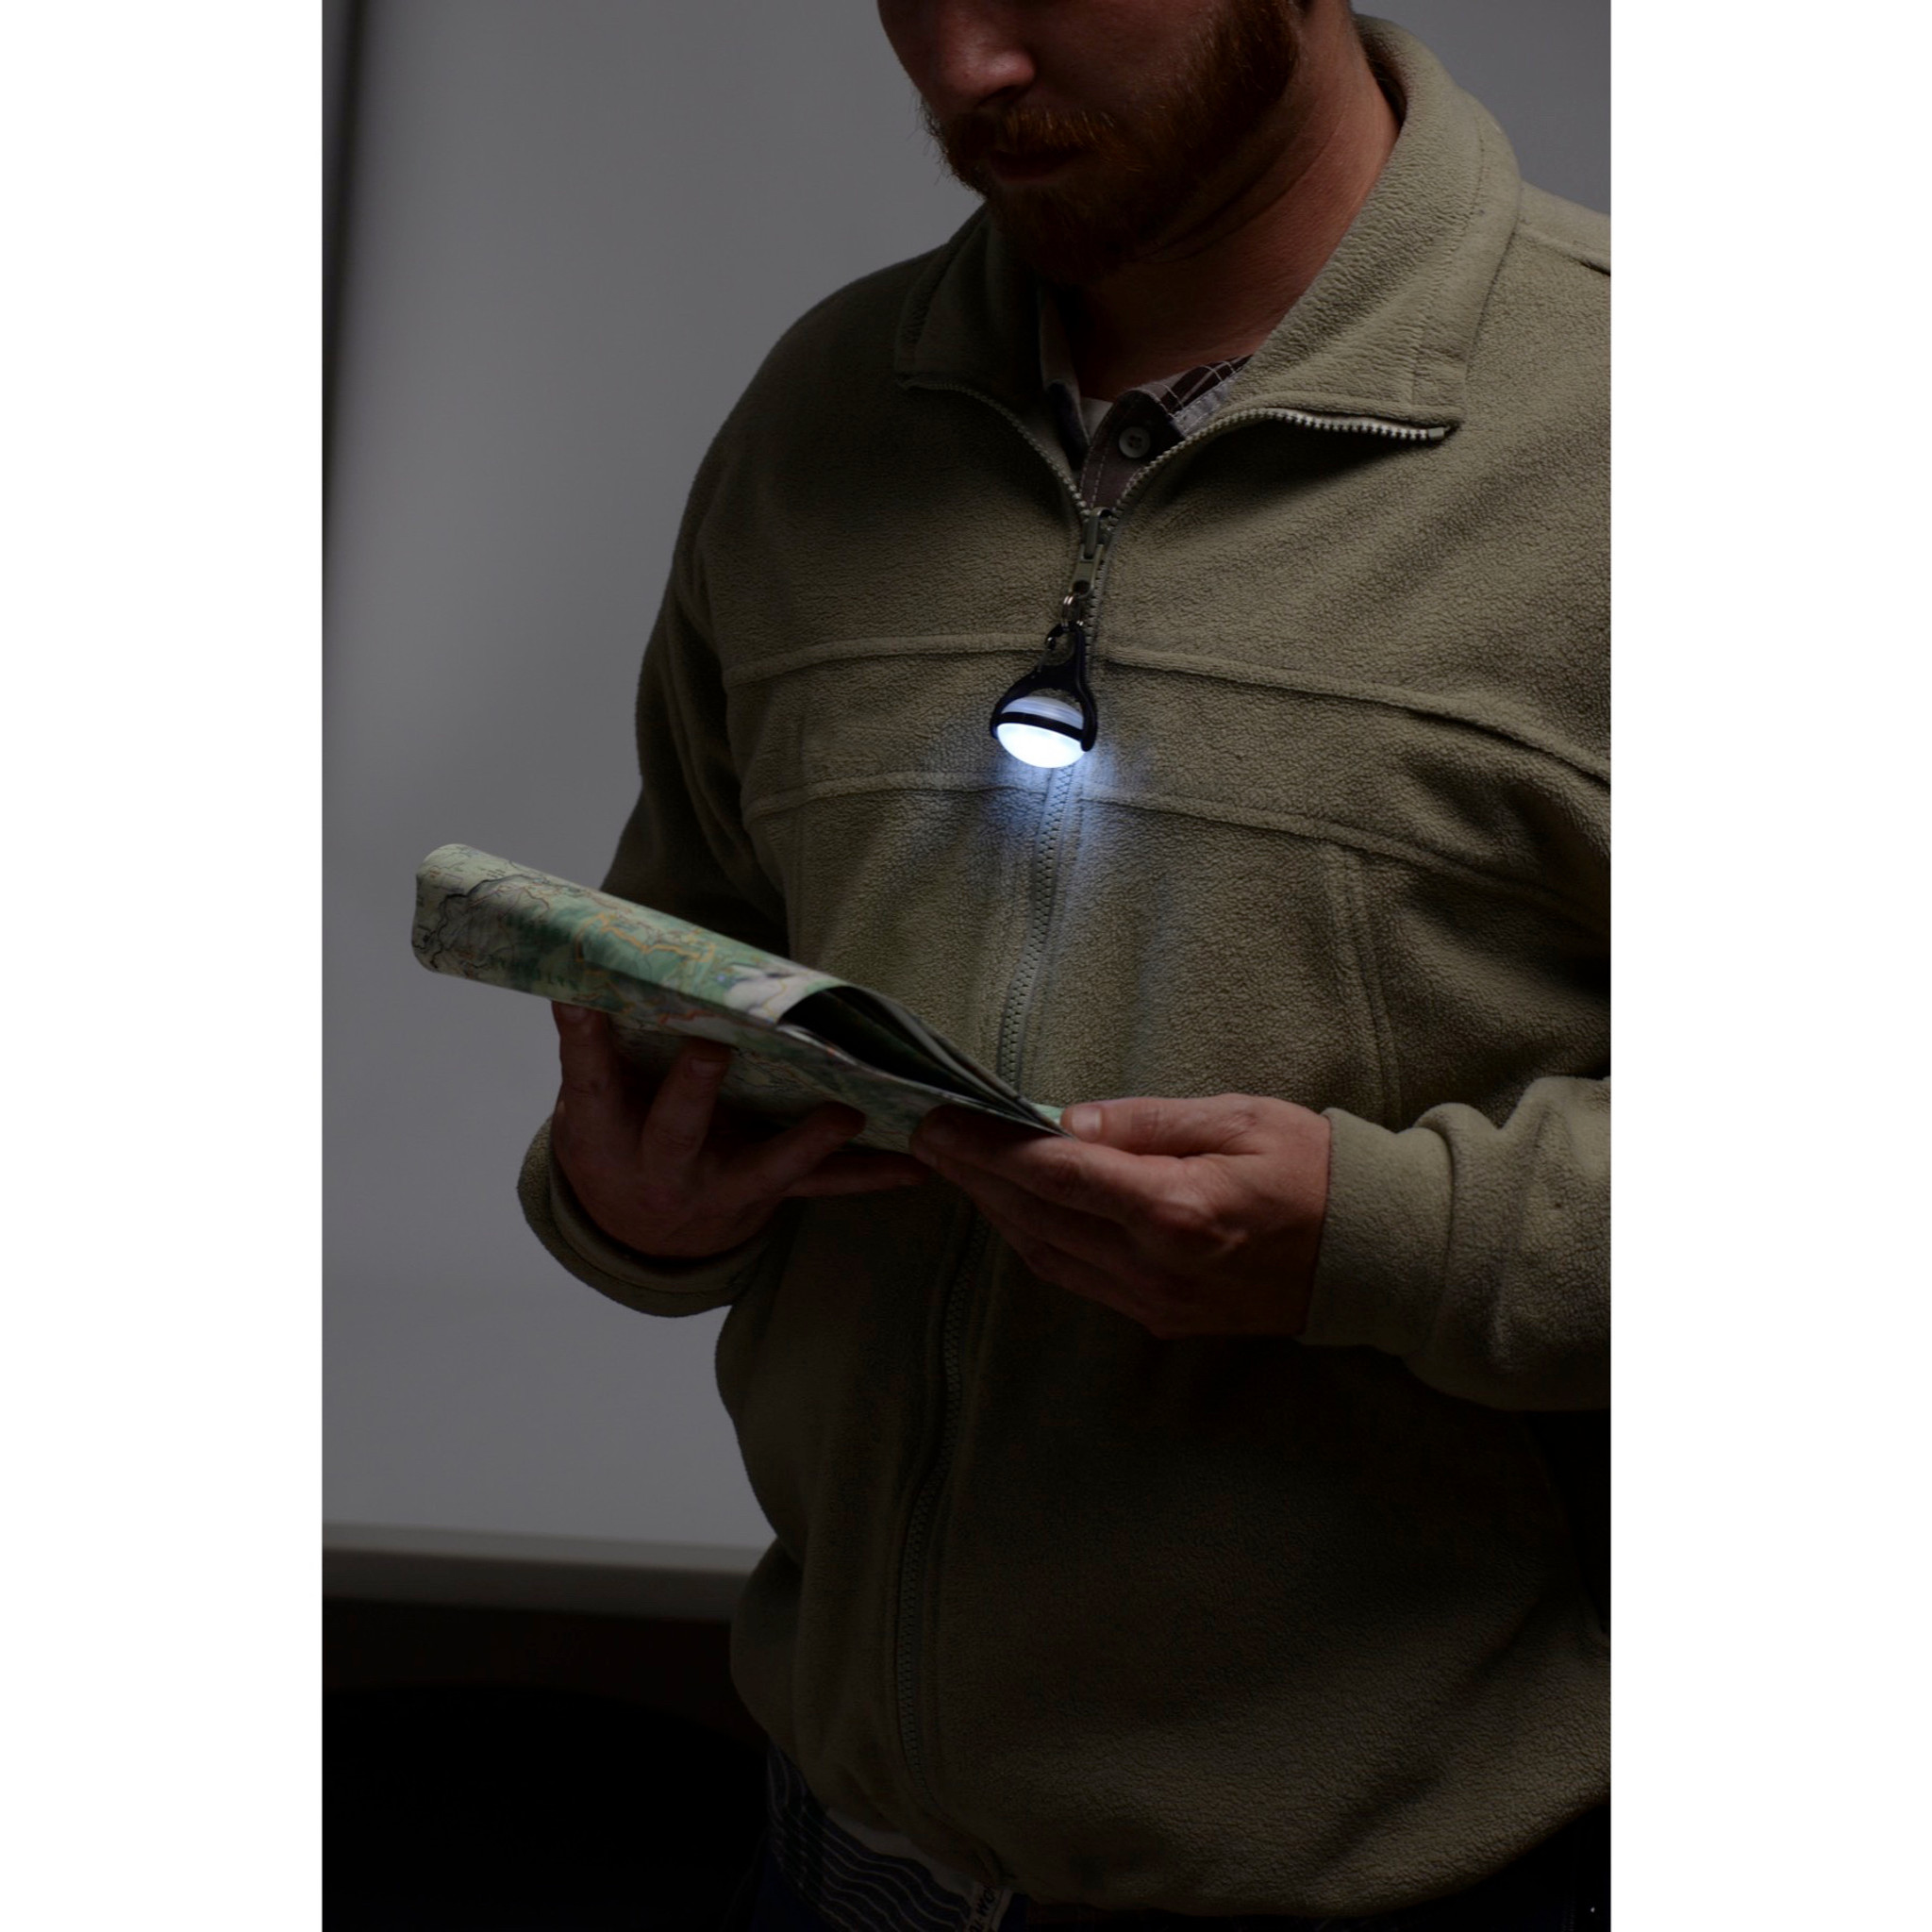 2-Pack Nite Ize MoonLit LED Micro Lantern White w/Carabiner Clip Tent Light 